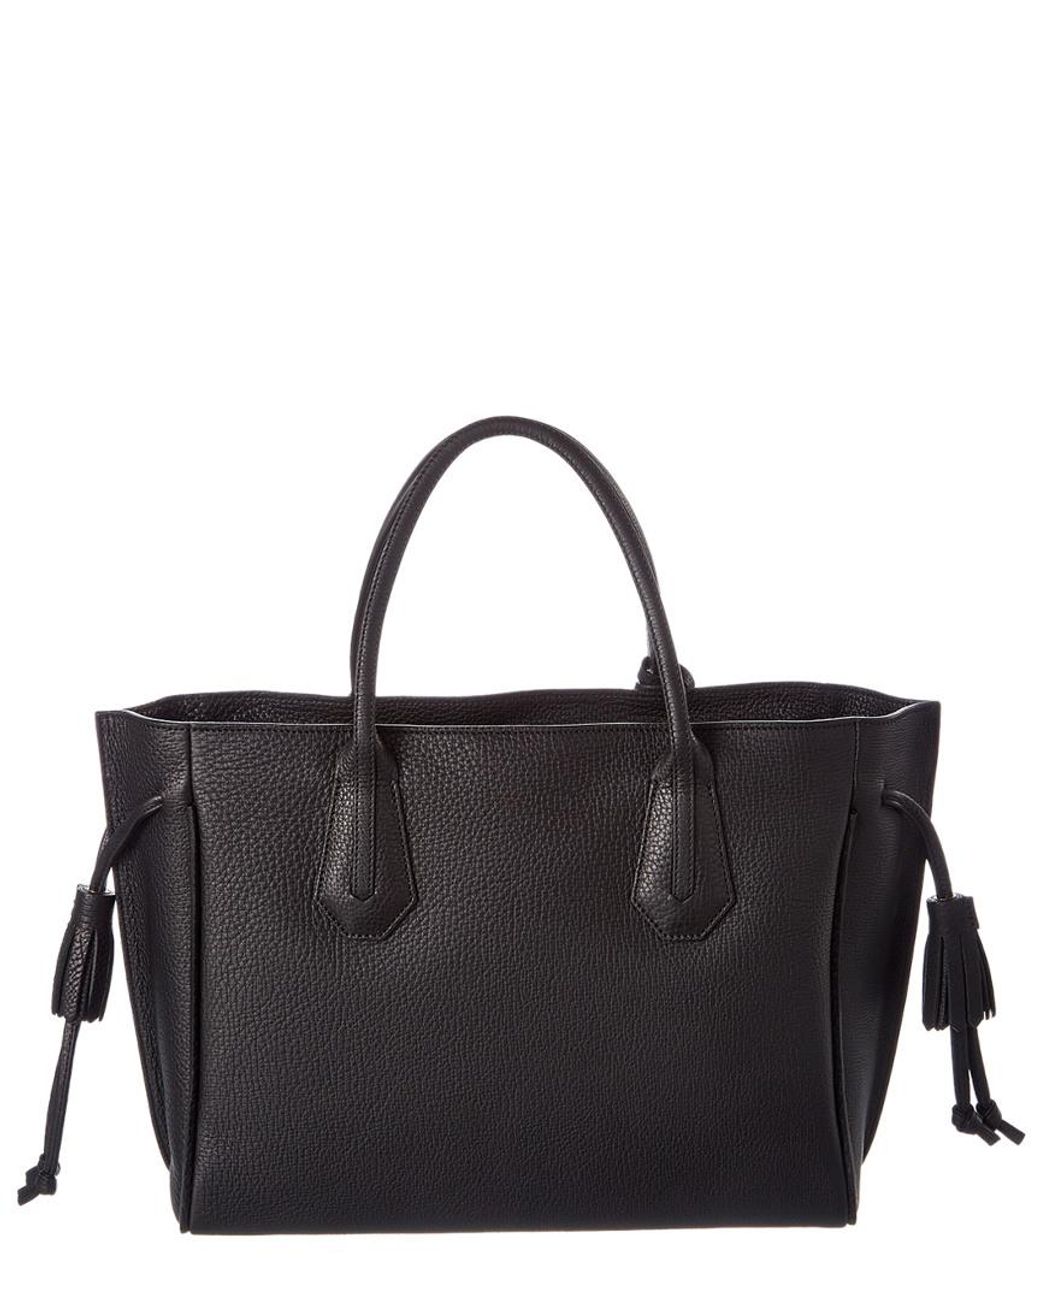 Longchamp Penelope Medium Leather Tote Bag in Black | Lyst